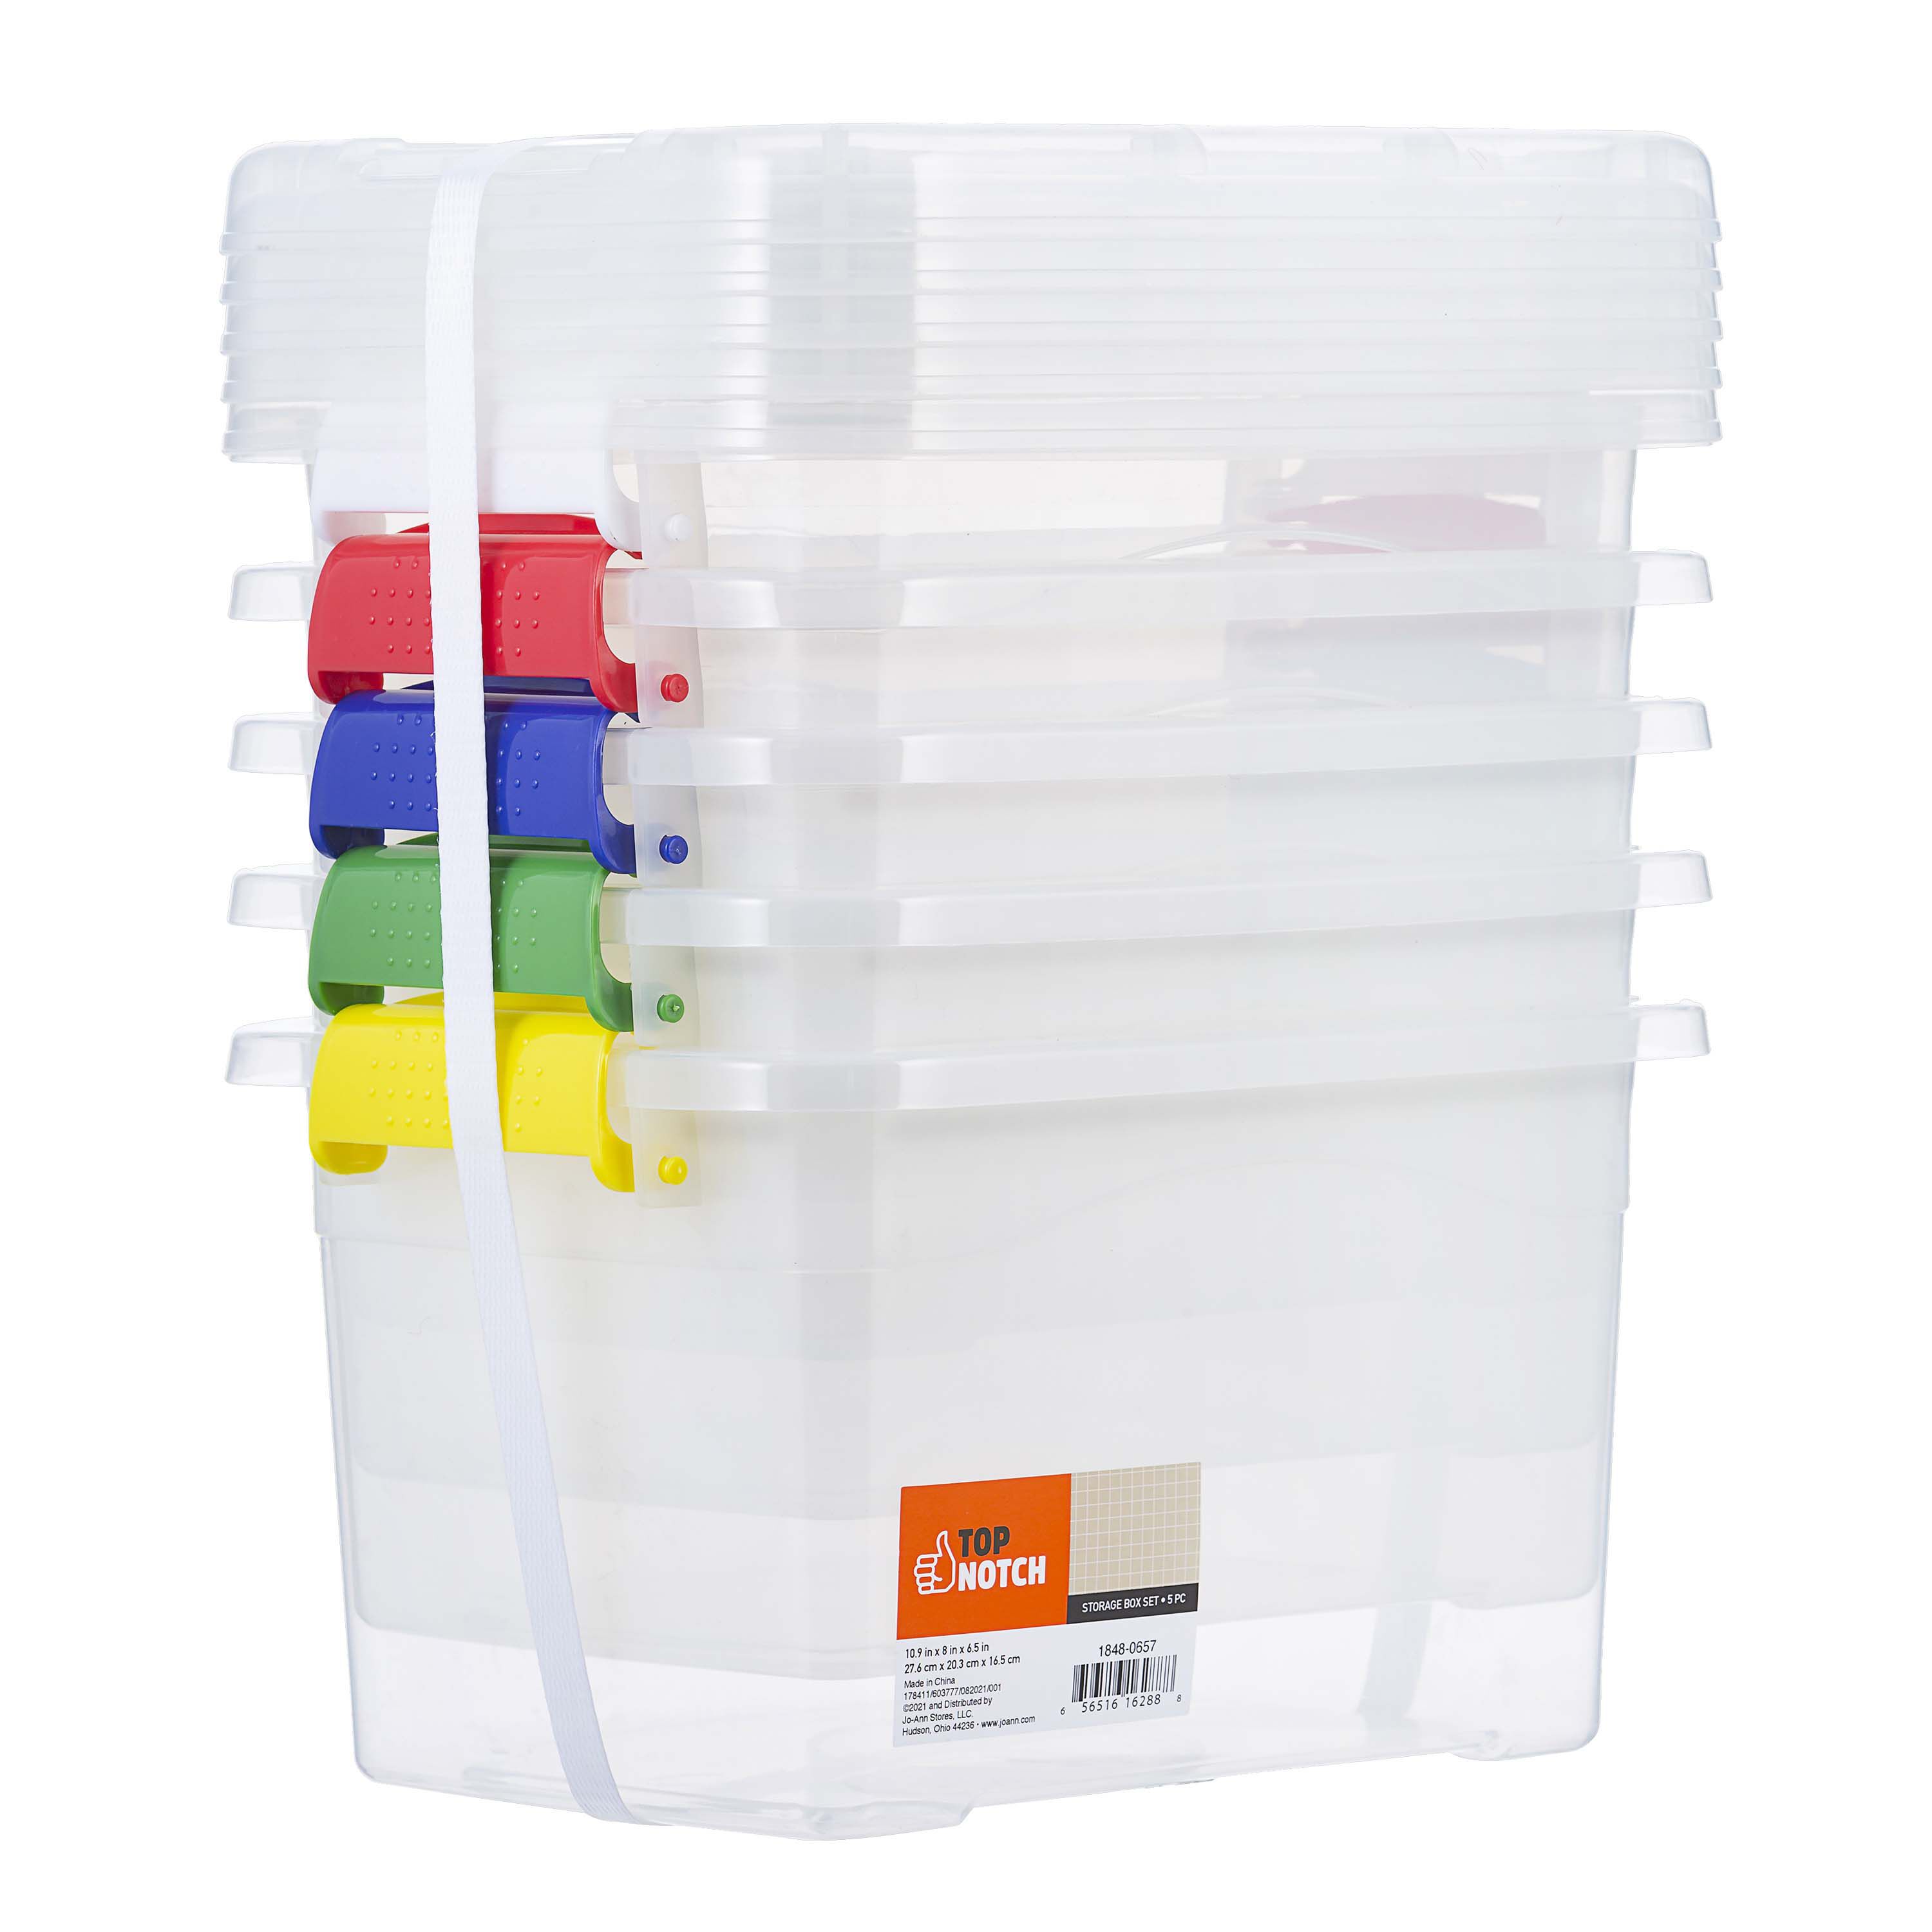 11 x 6.5 Storage Boxes with Latch Closures 5ct by Top Notch - Plastic Storage - Storage & Organization